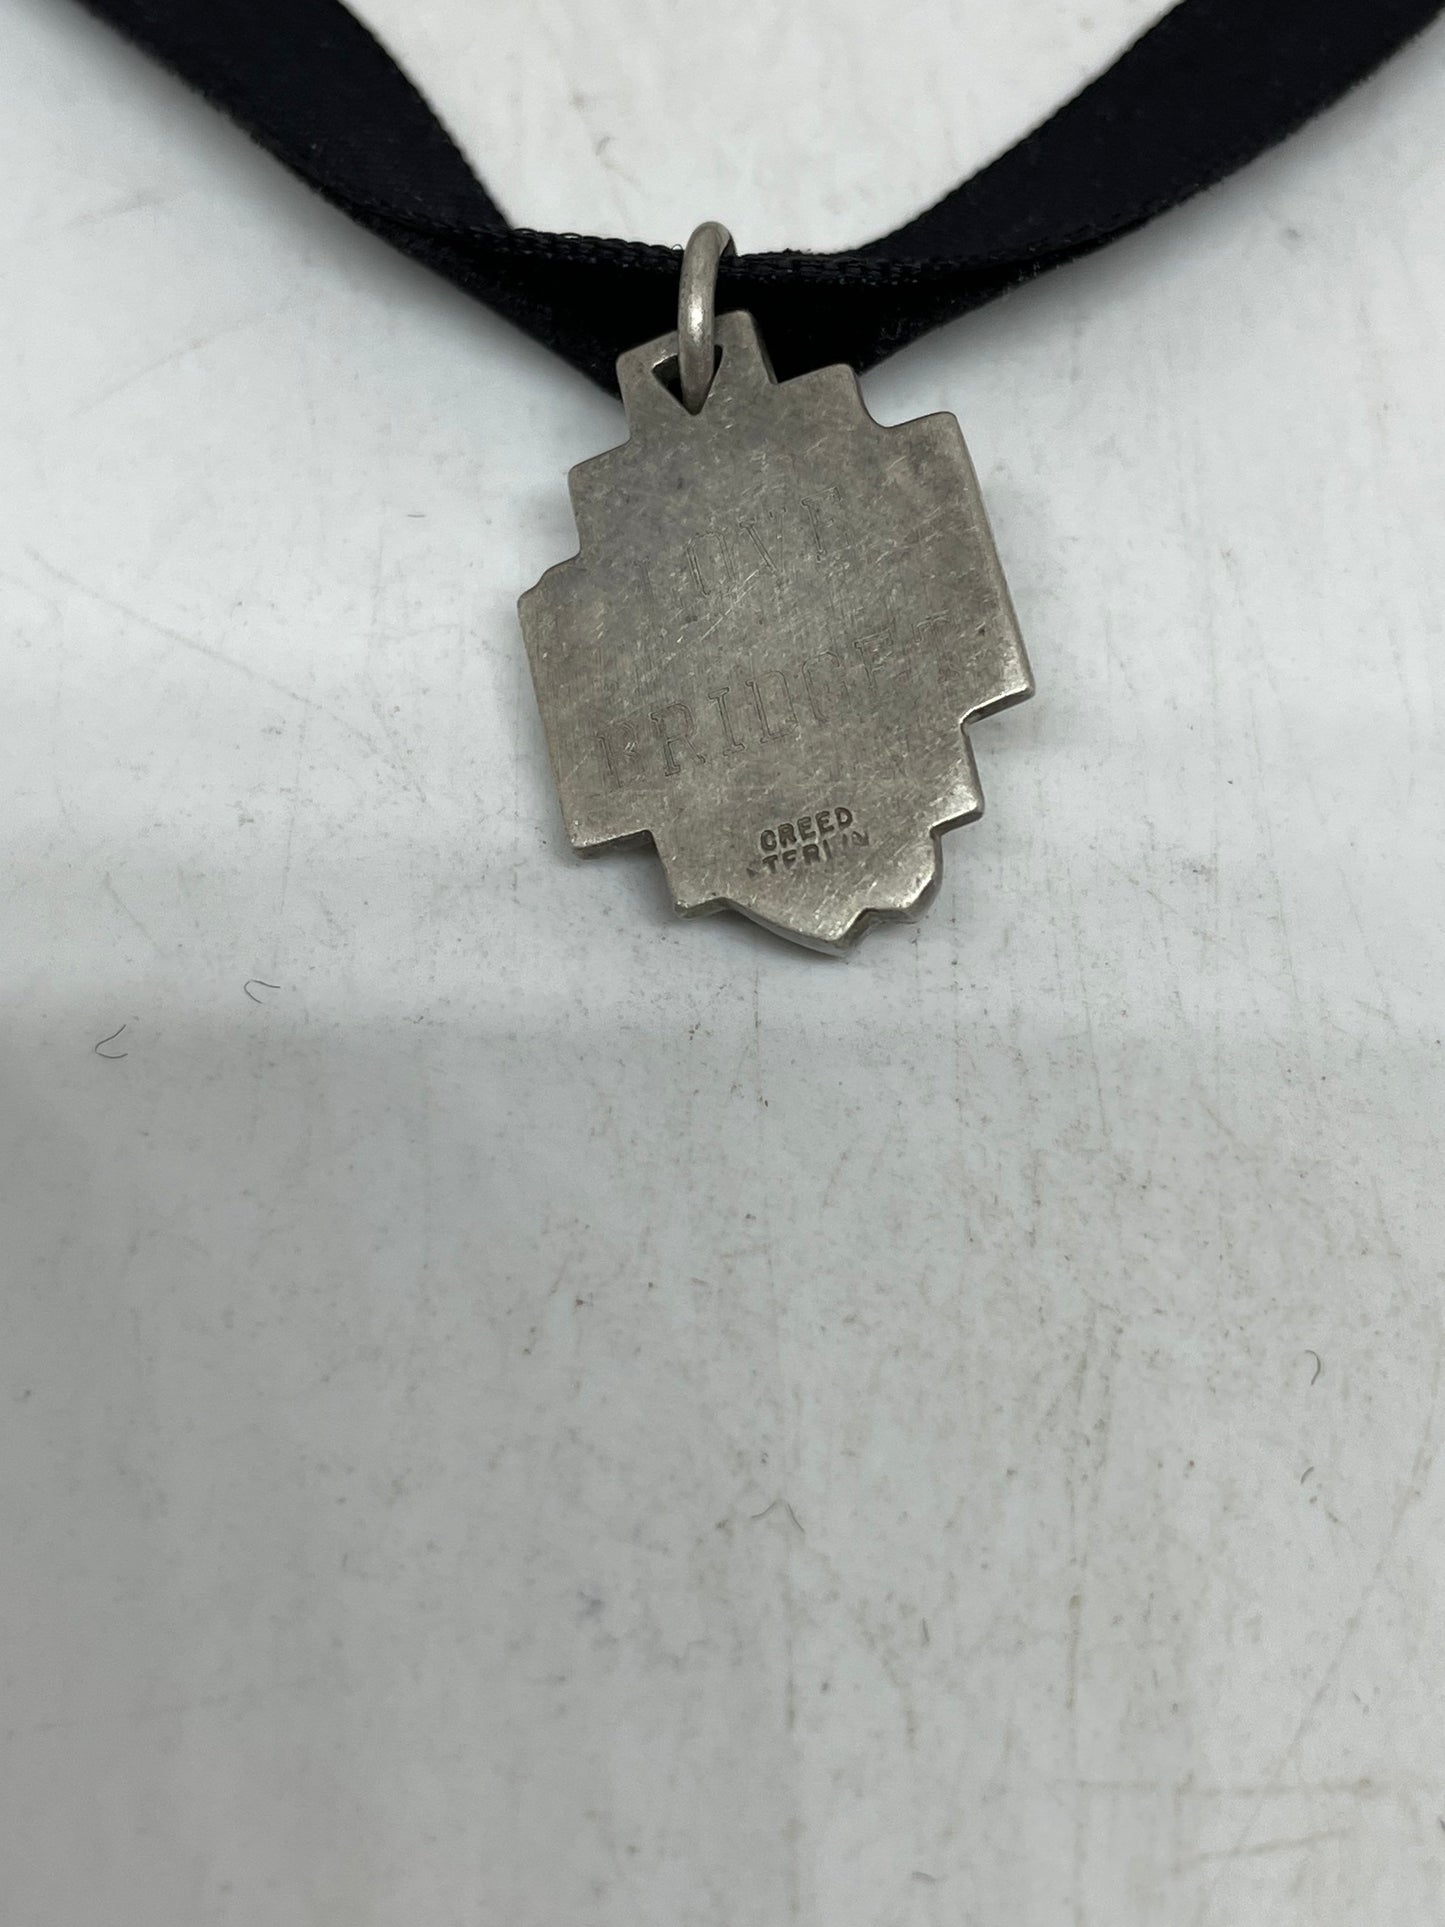 Vintage Jesus Amulet Choker 925 Sterling Silver Pendant Necklace